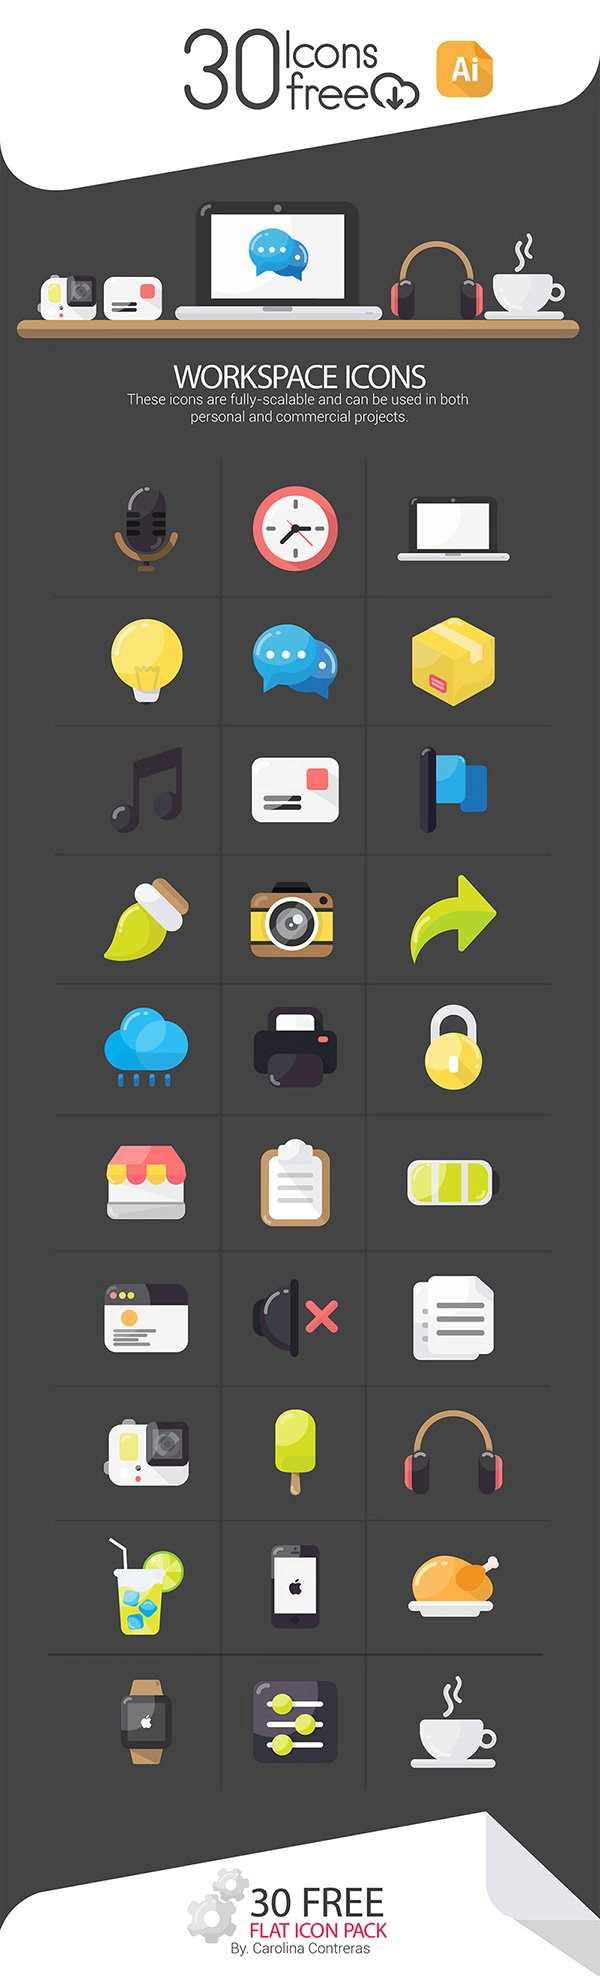 30 Free Icons